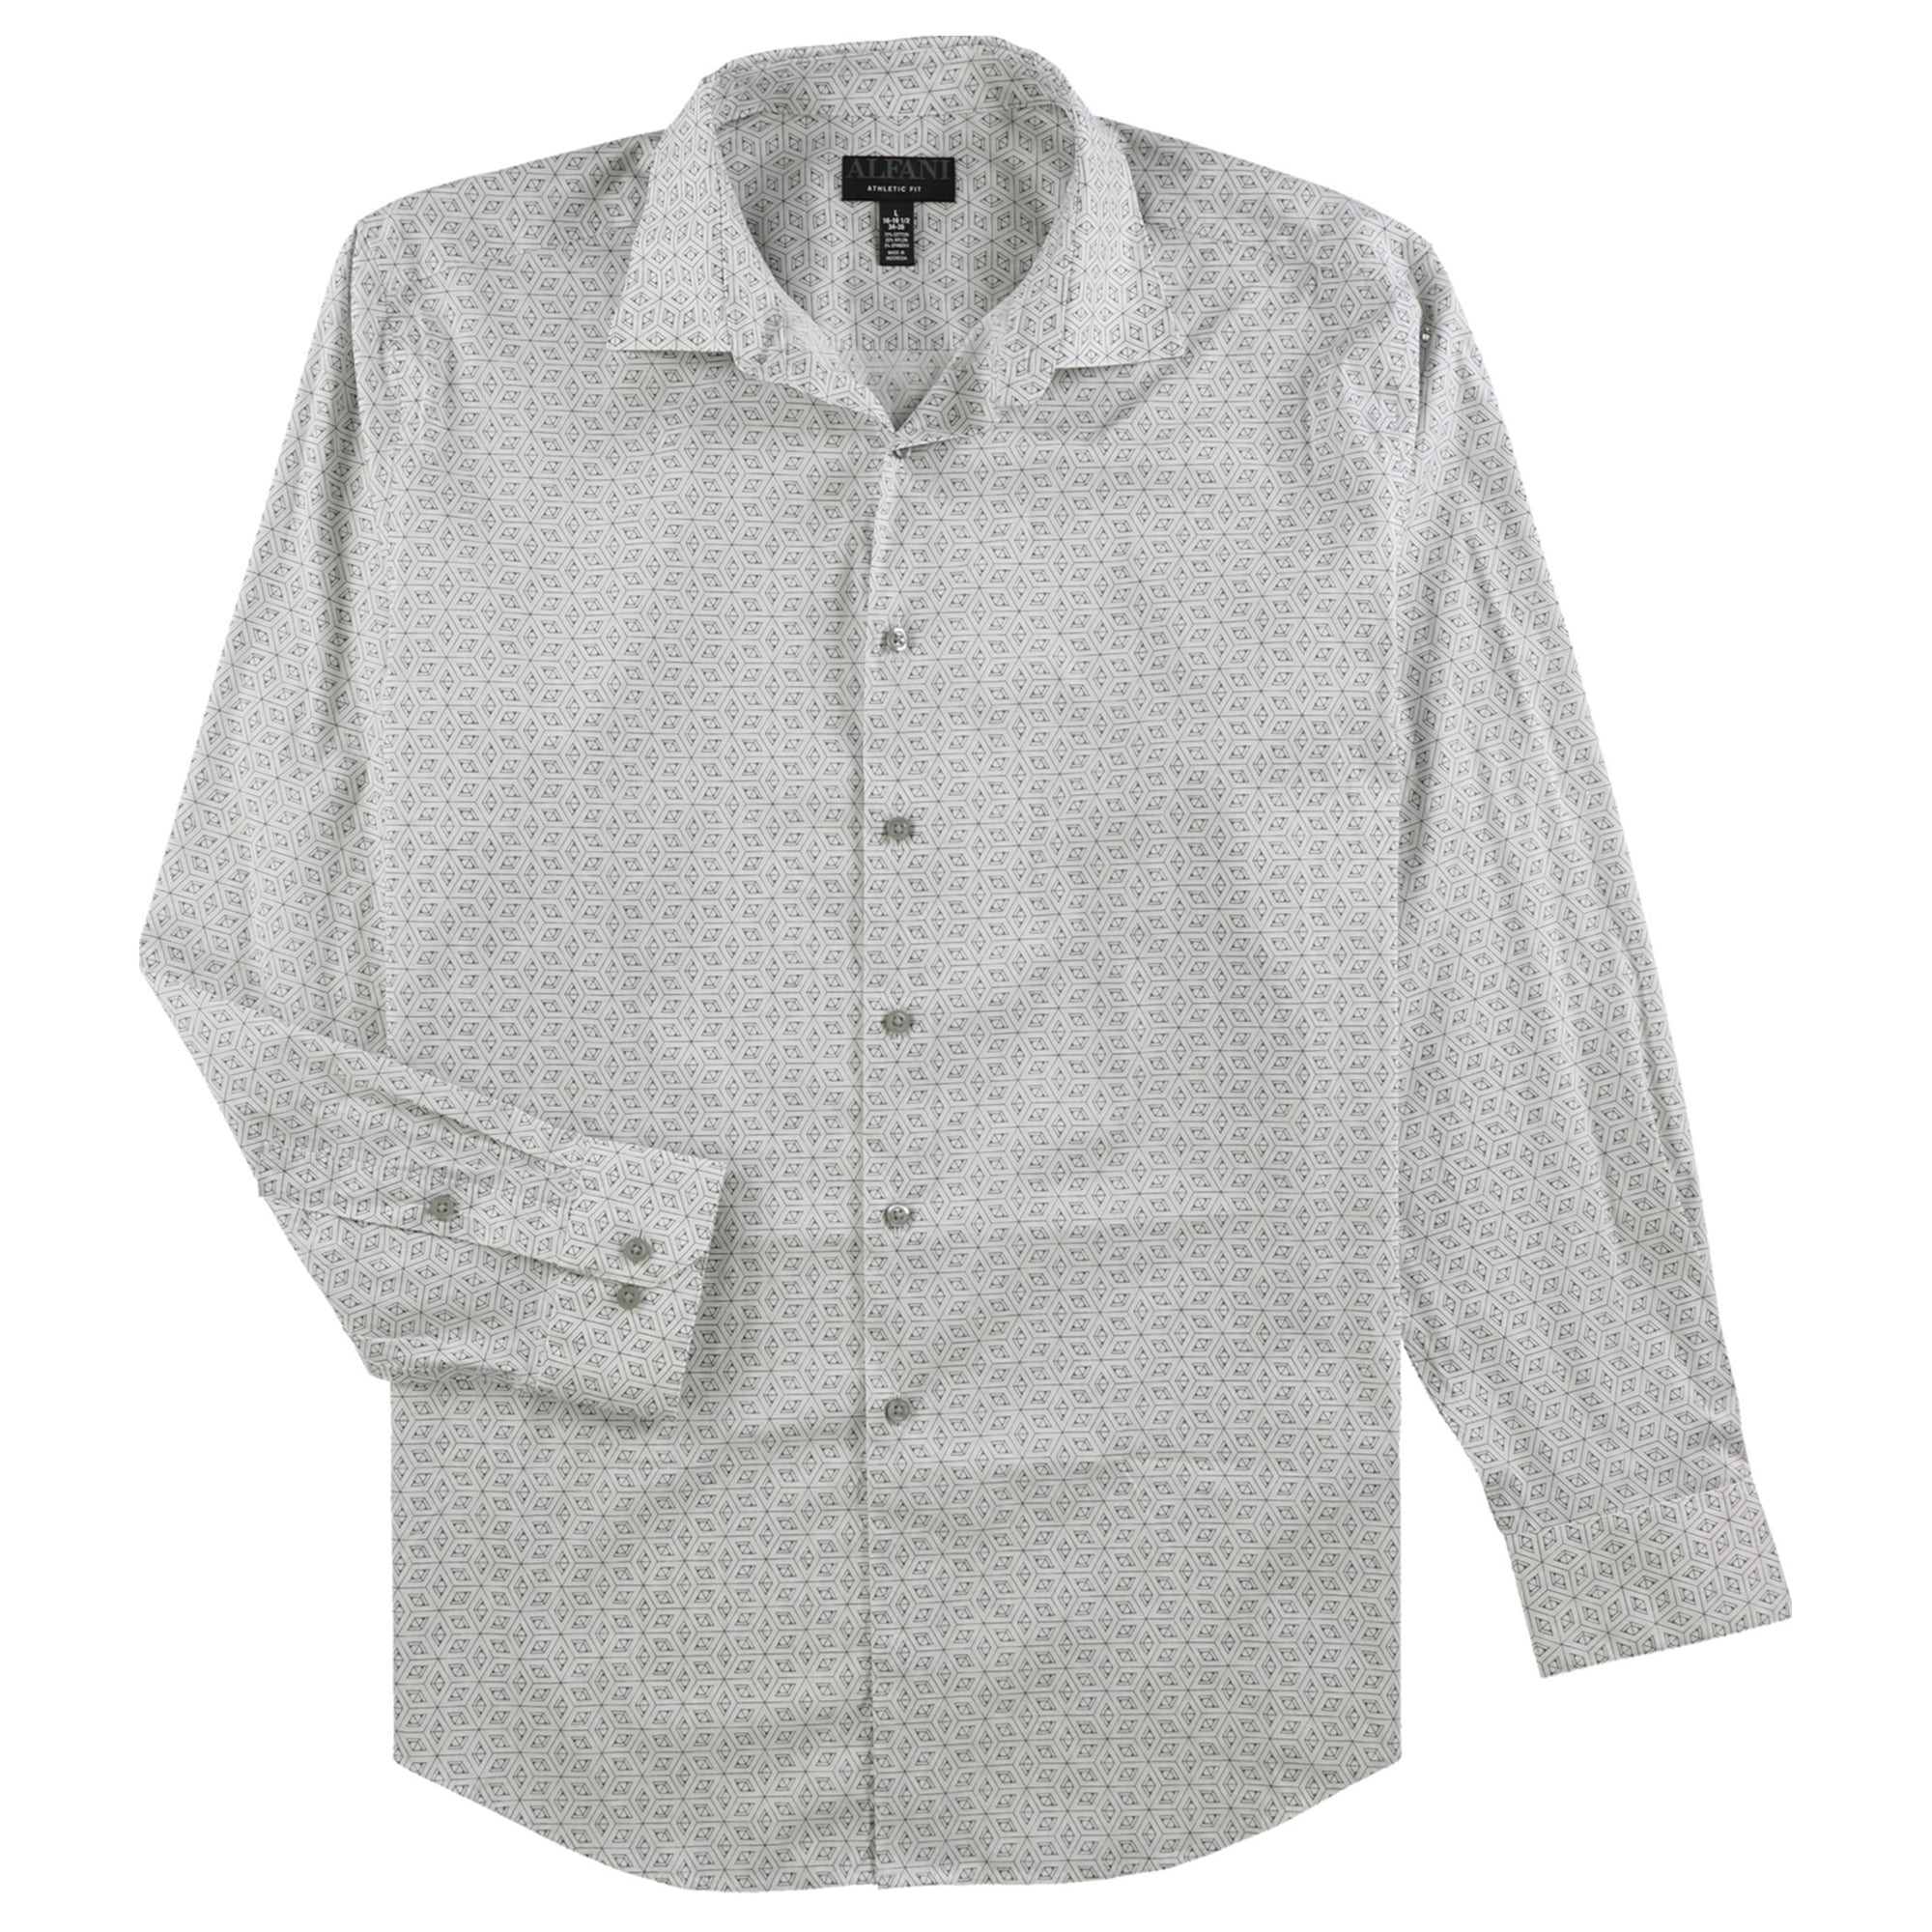 $99 RYAN SEACREST Men SLIM-FIT WHITE FRENCH-CUFF TUXEDO DRESS SHIRT 14.5 32/33 S 